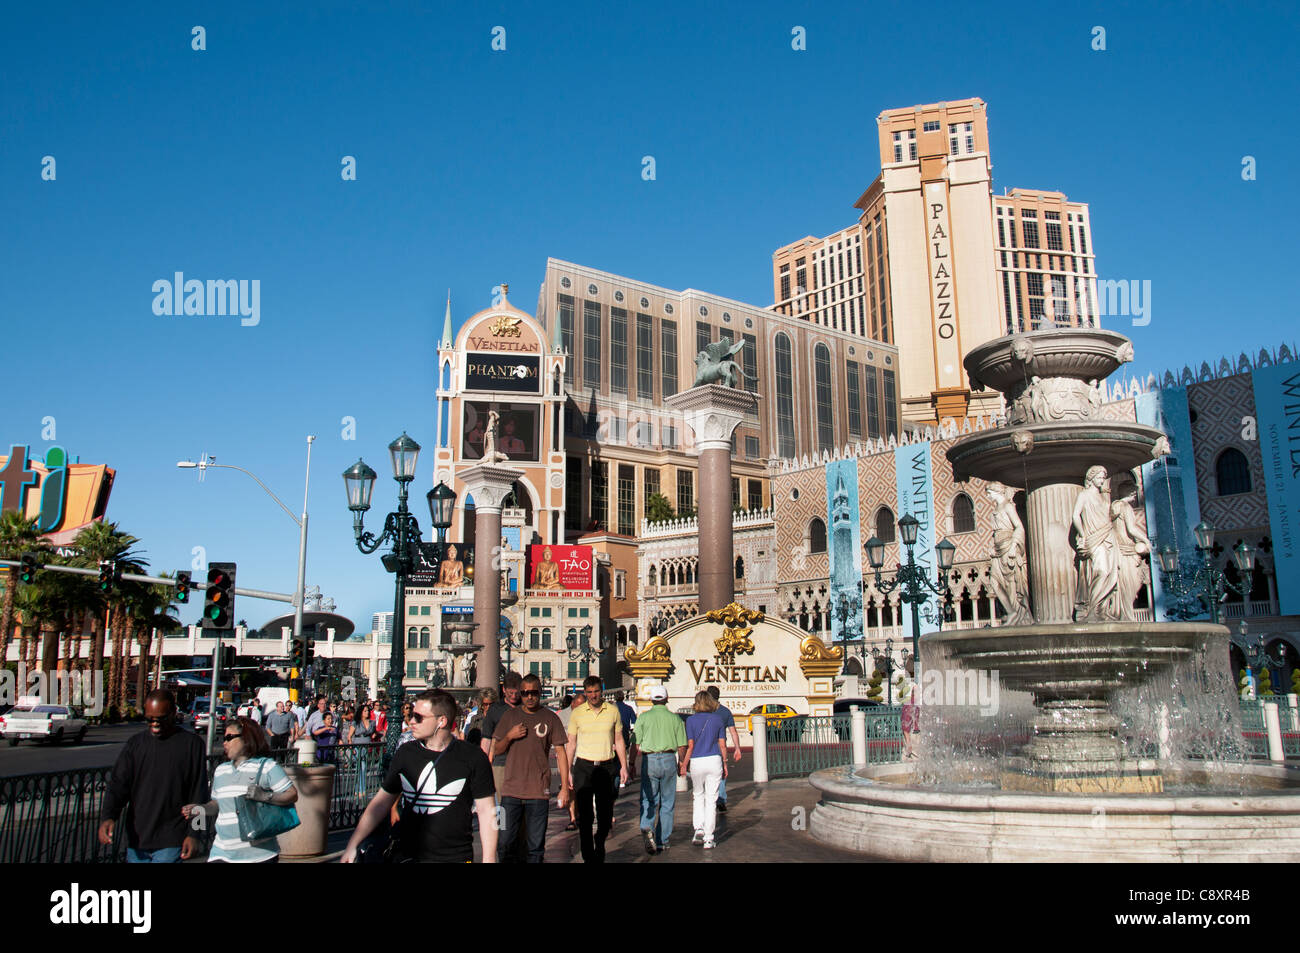 Venetian Venedig Las Vegas Glücksspiel Hauptstadt der Welt-USA-Nevada Stockfoto